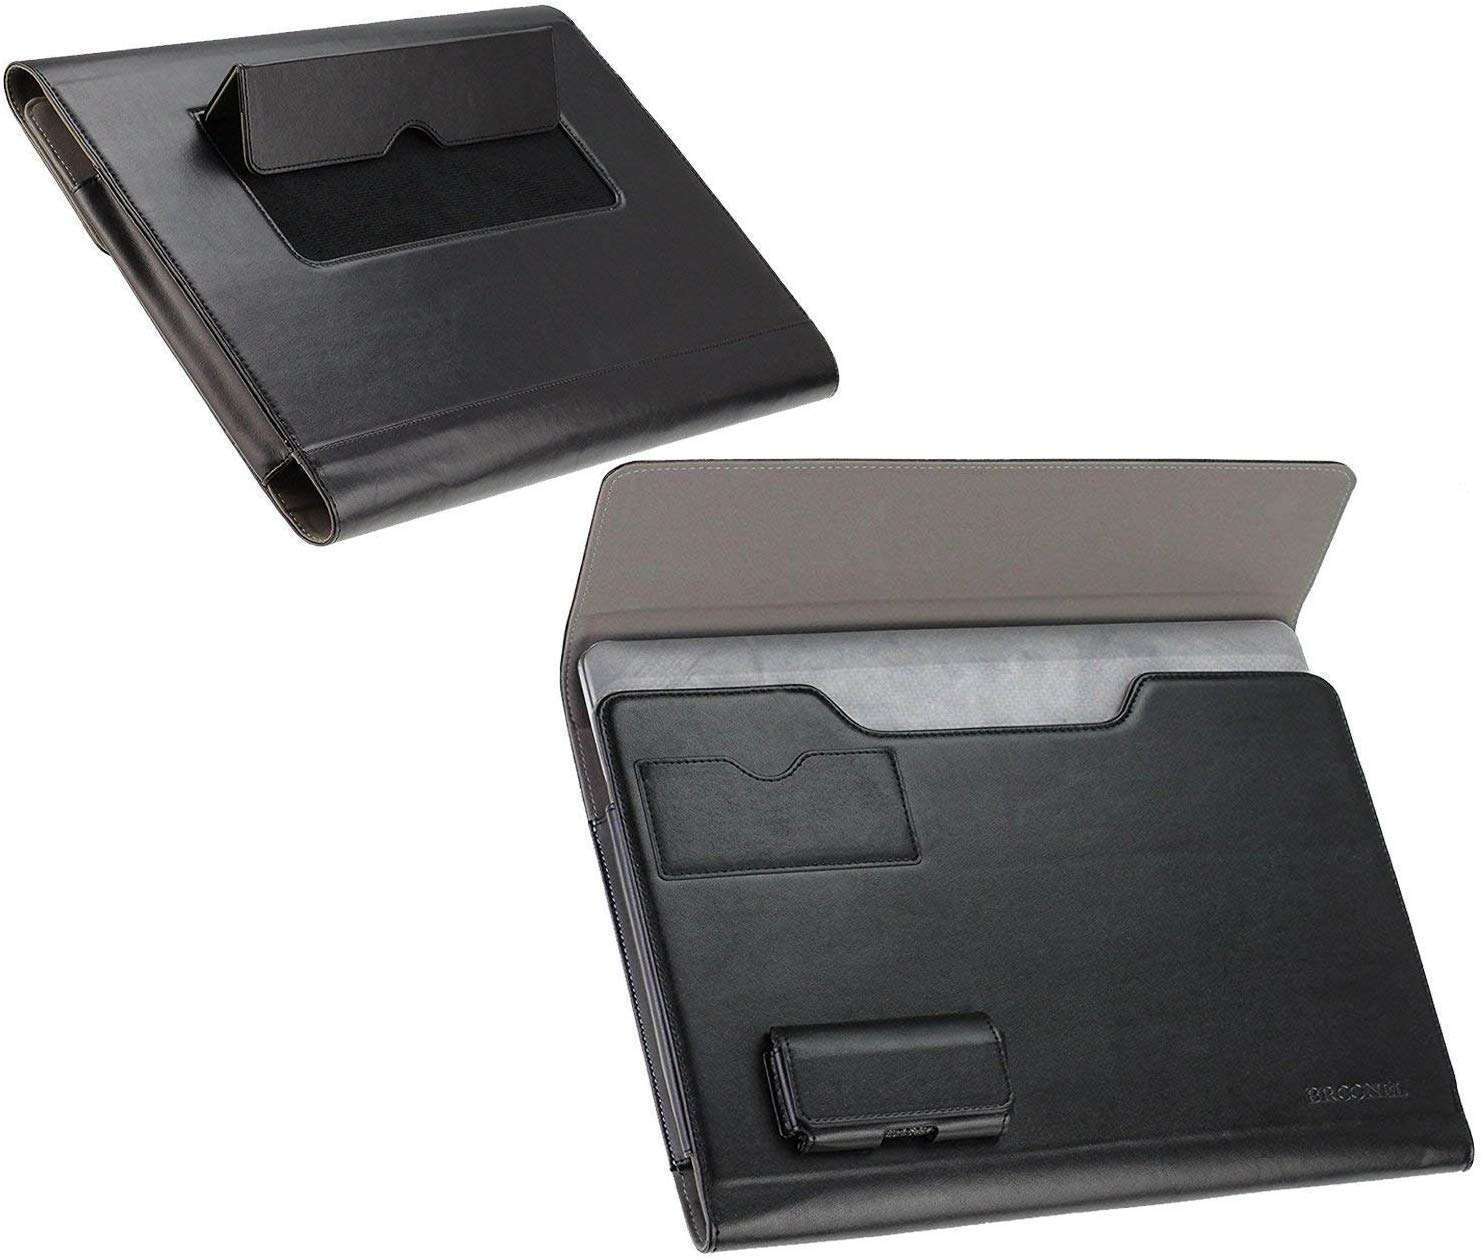 Broonel Leather Folio Case for the VEIKK S640 6x4 Inch